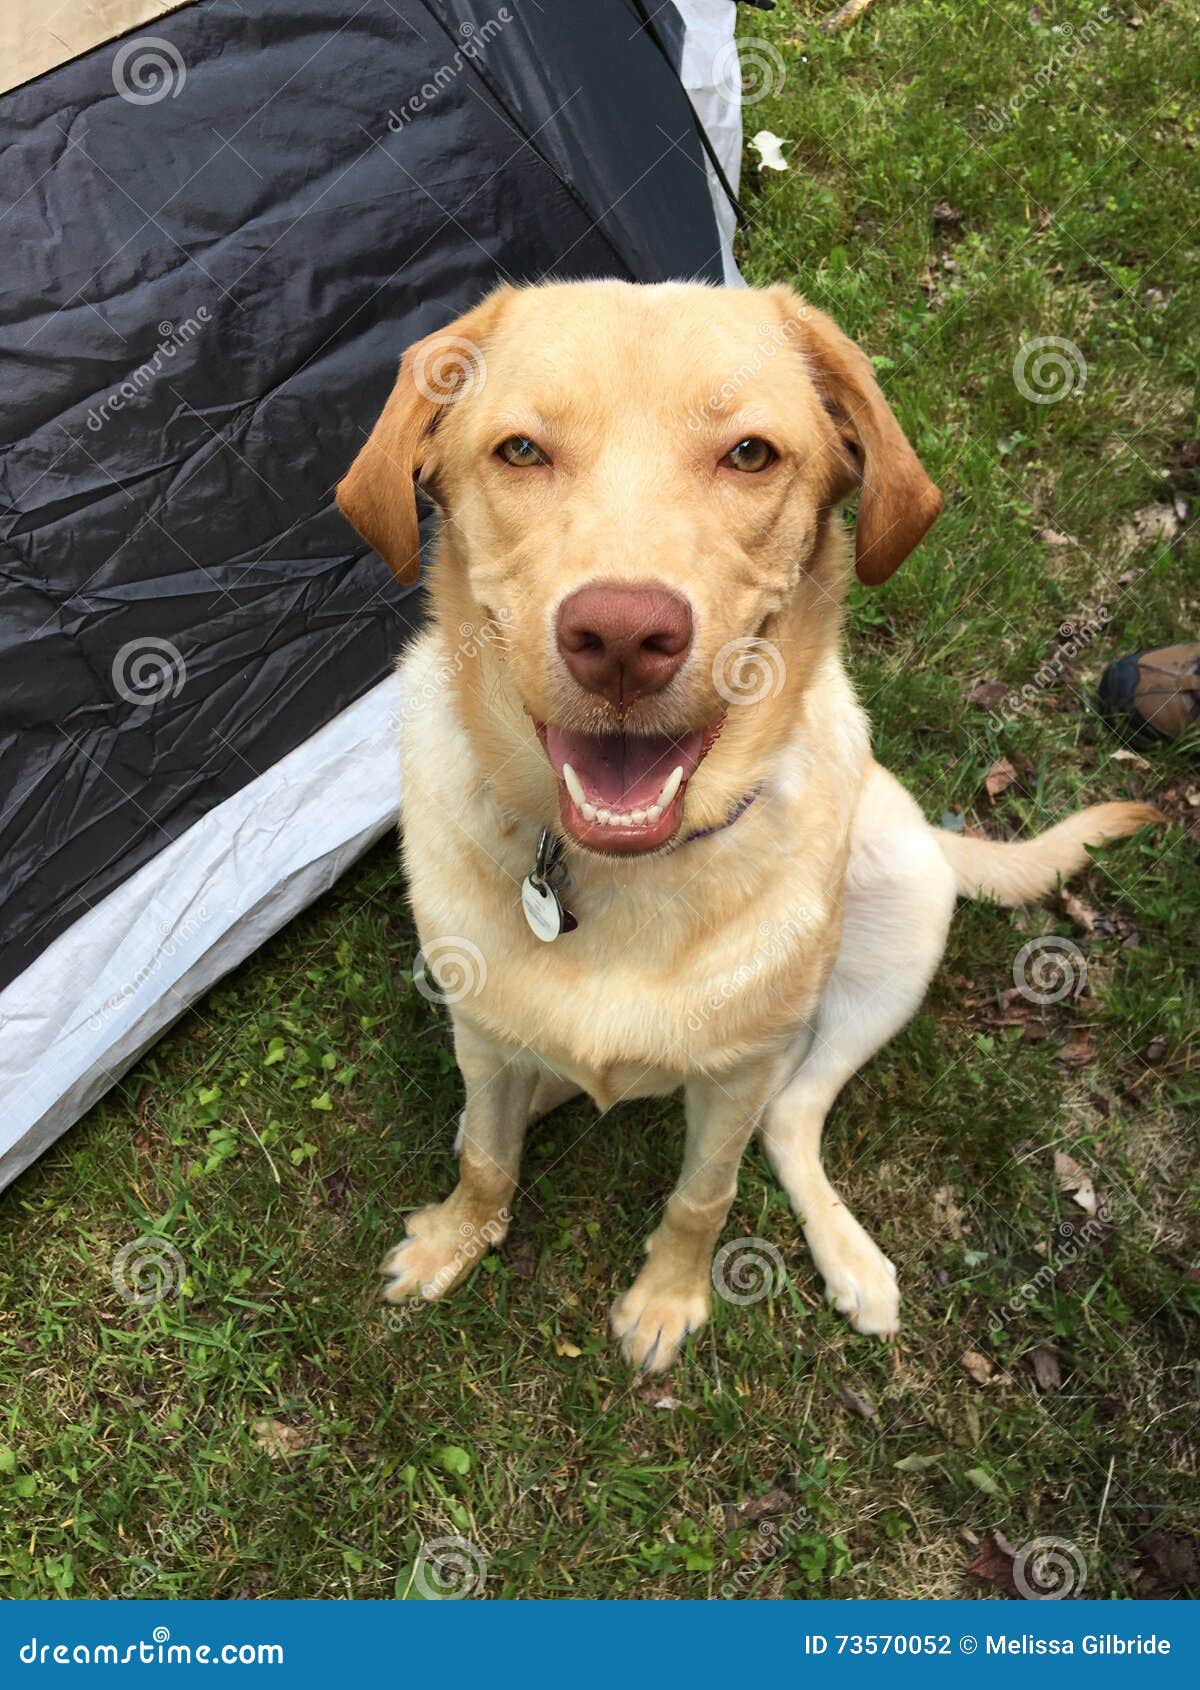 happy camper dog